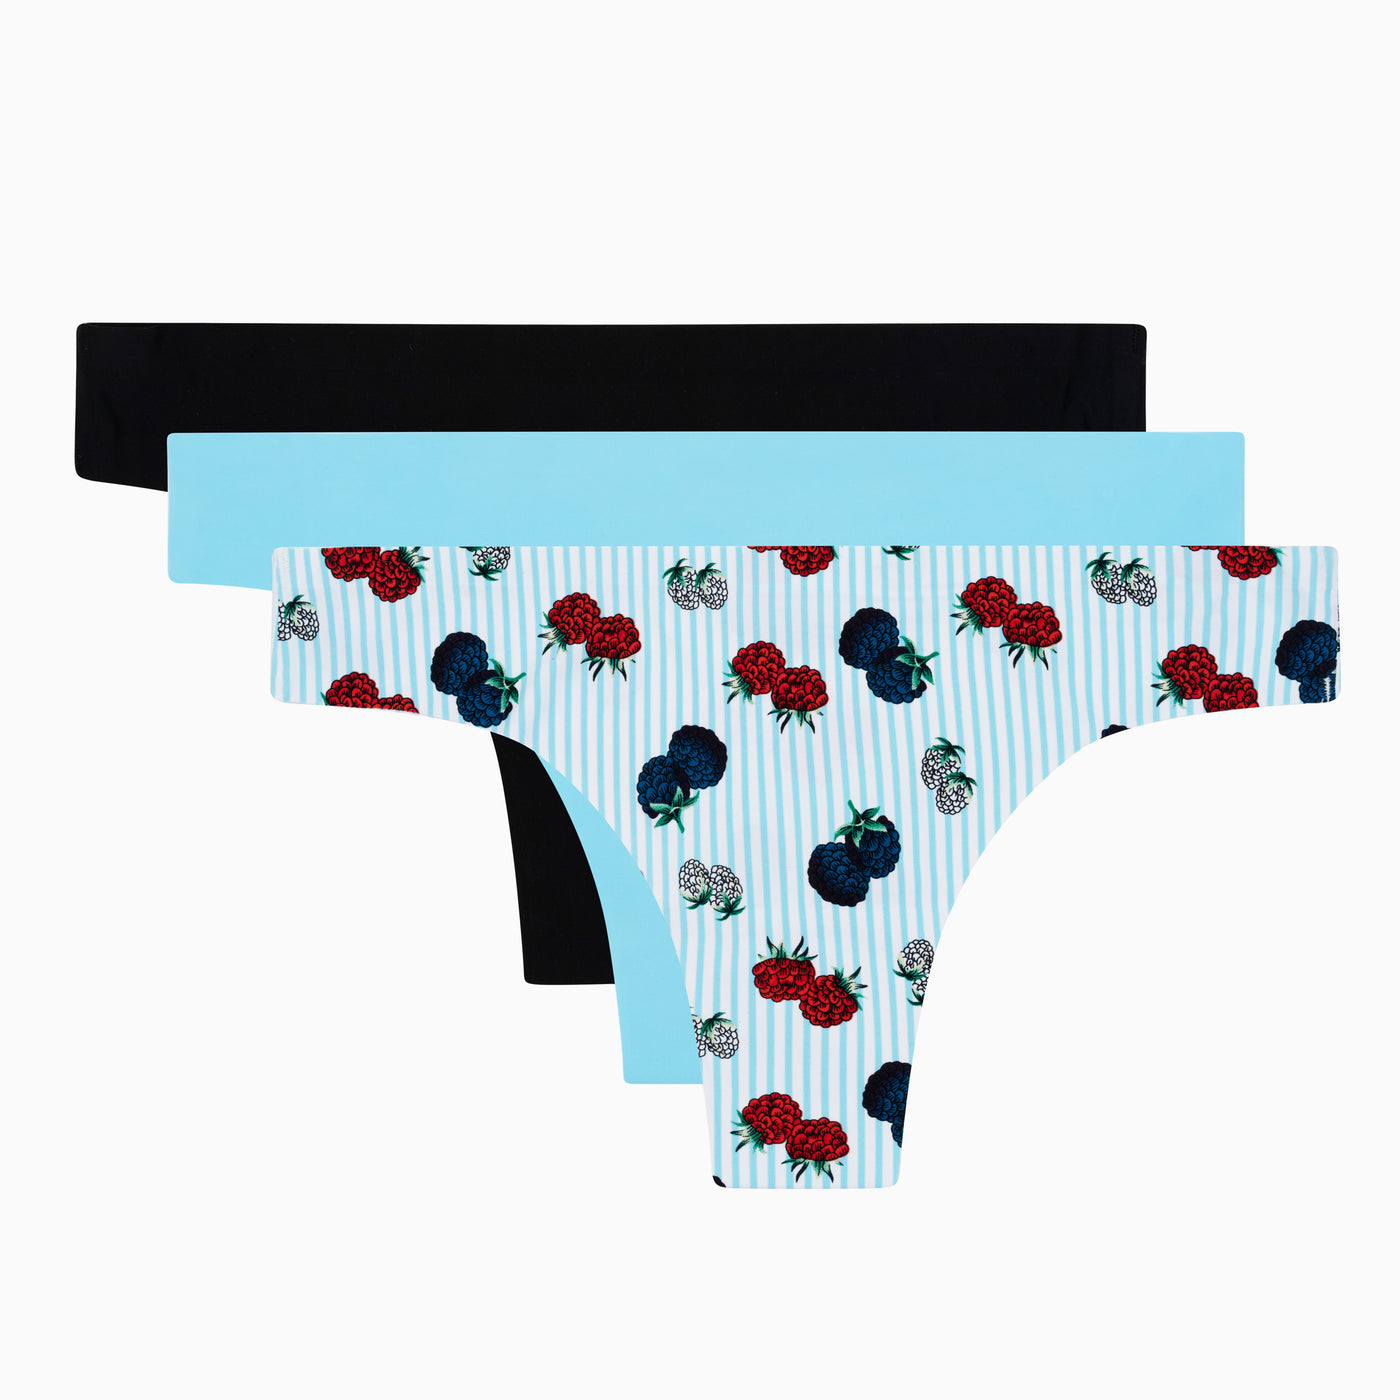 AQS Seamless Bikini Underwear - 3 Pack 